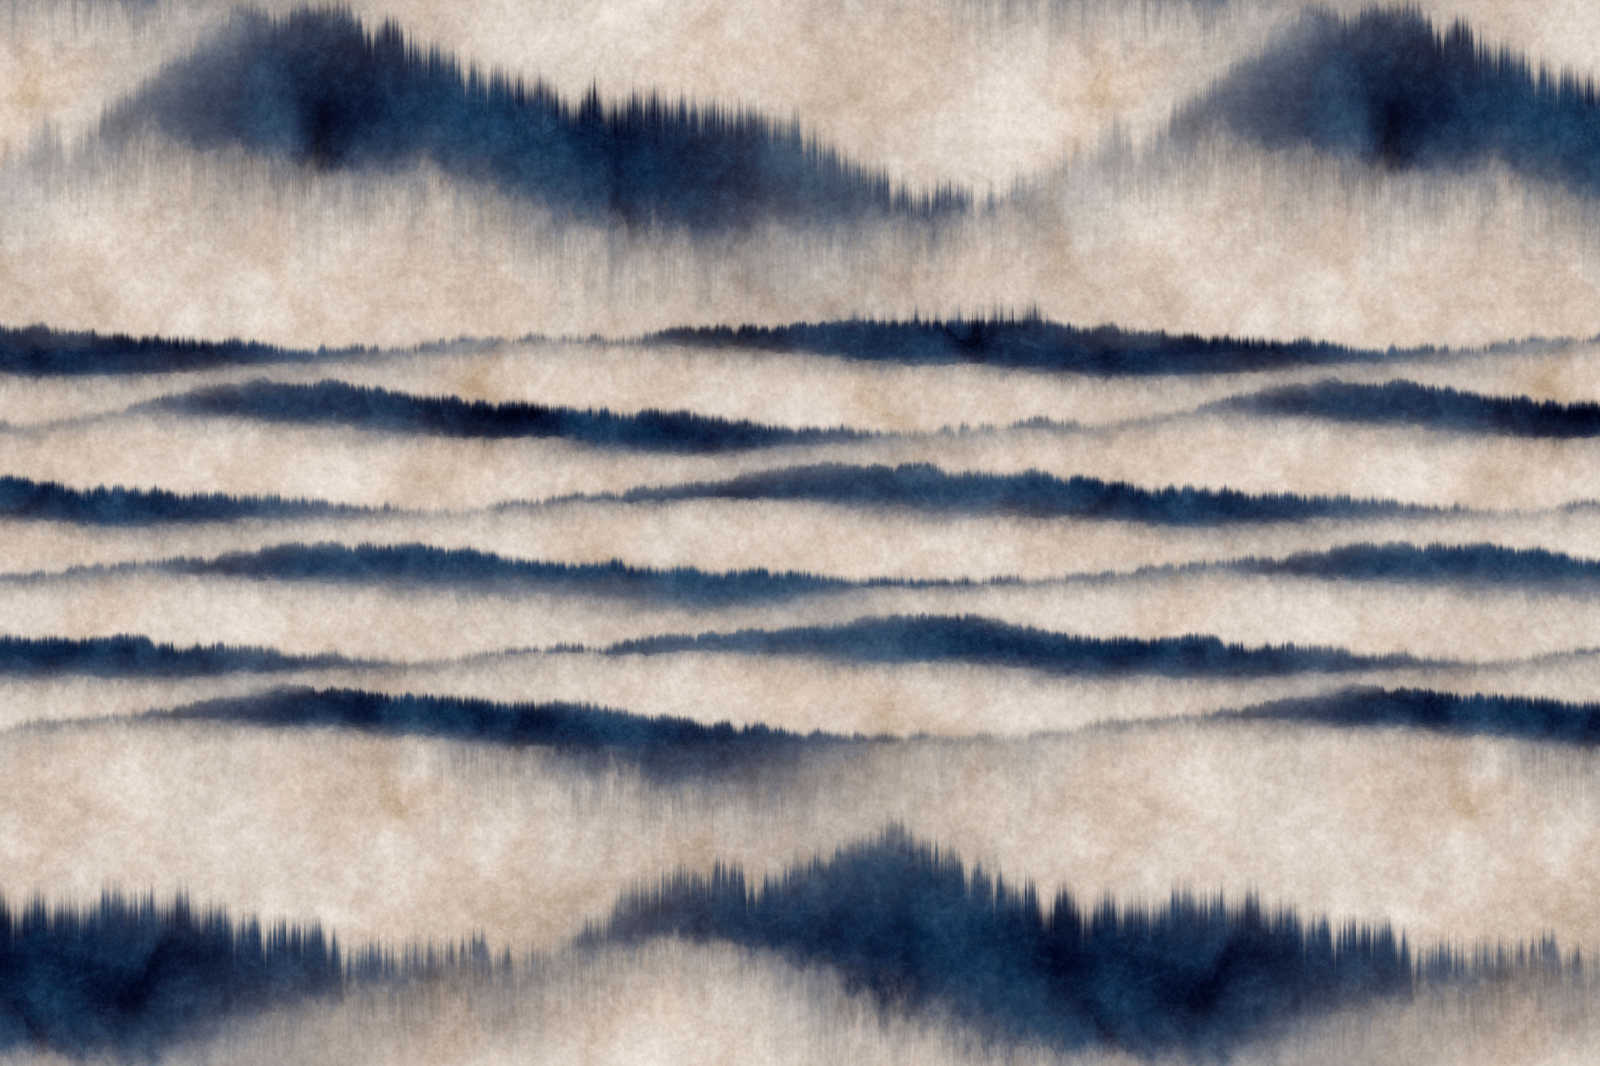             Leinwandbild abstraktes Muster Wellen | blau, weiß – 0,90 m x 0,60 m
        